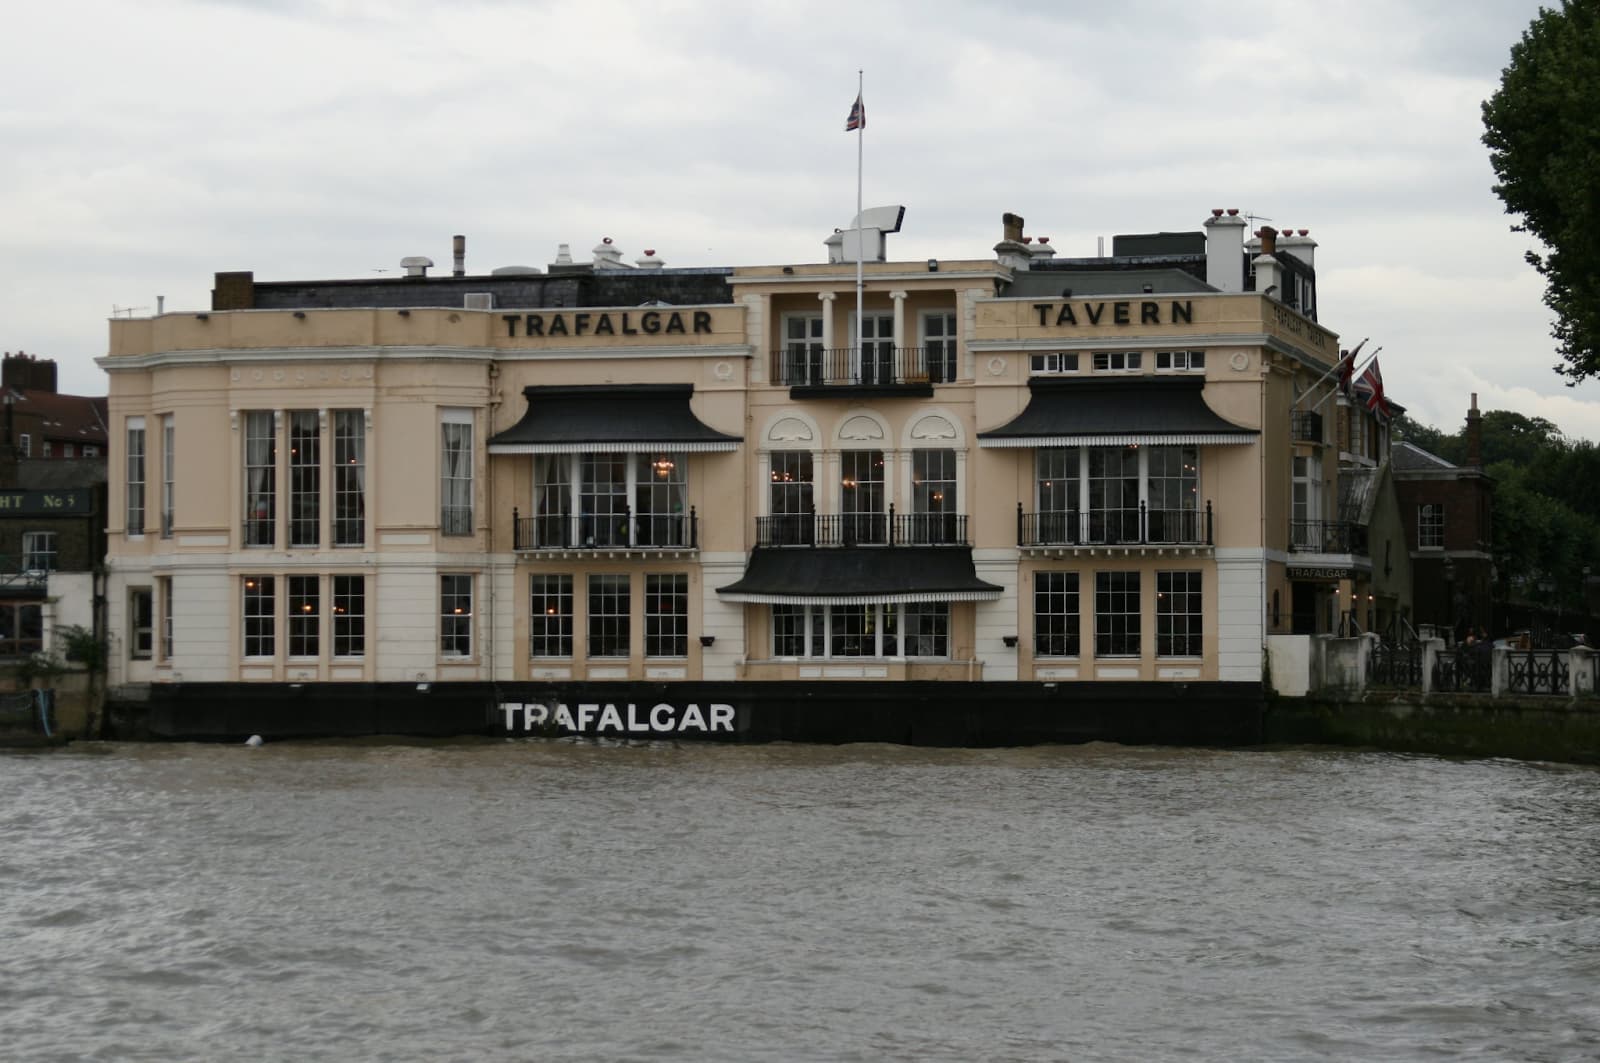 Trafalgar Tavern: Where History, Riverside Beauty Unite